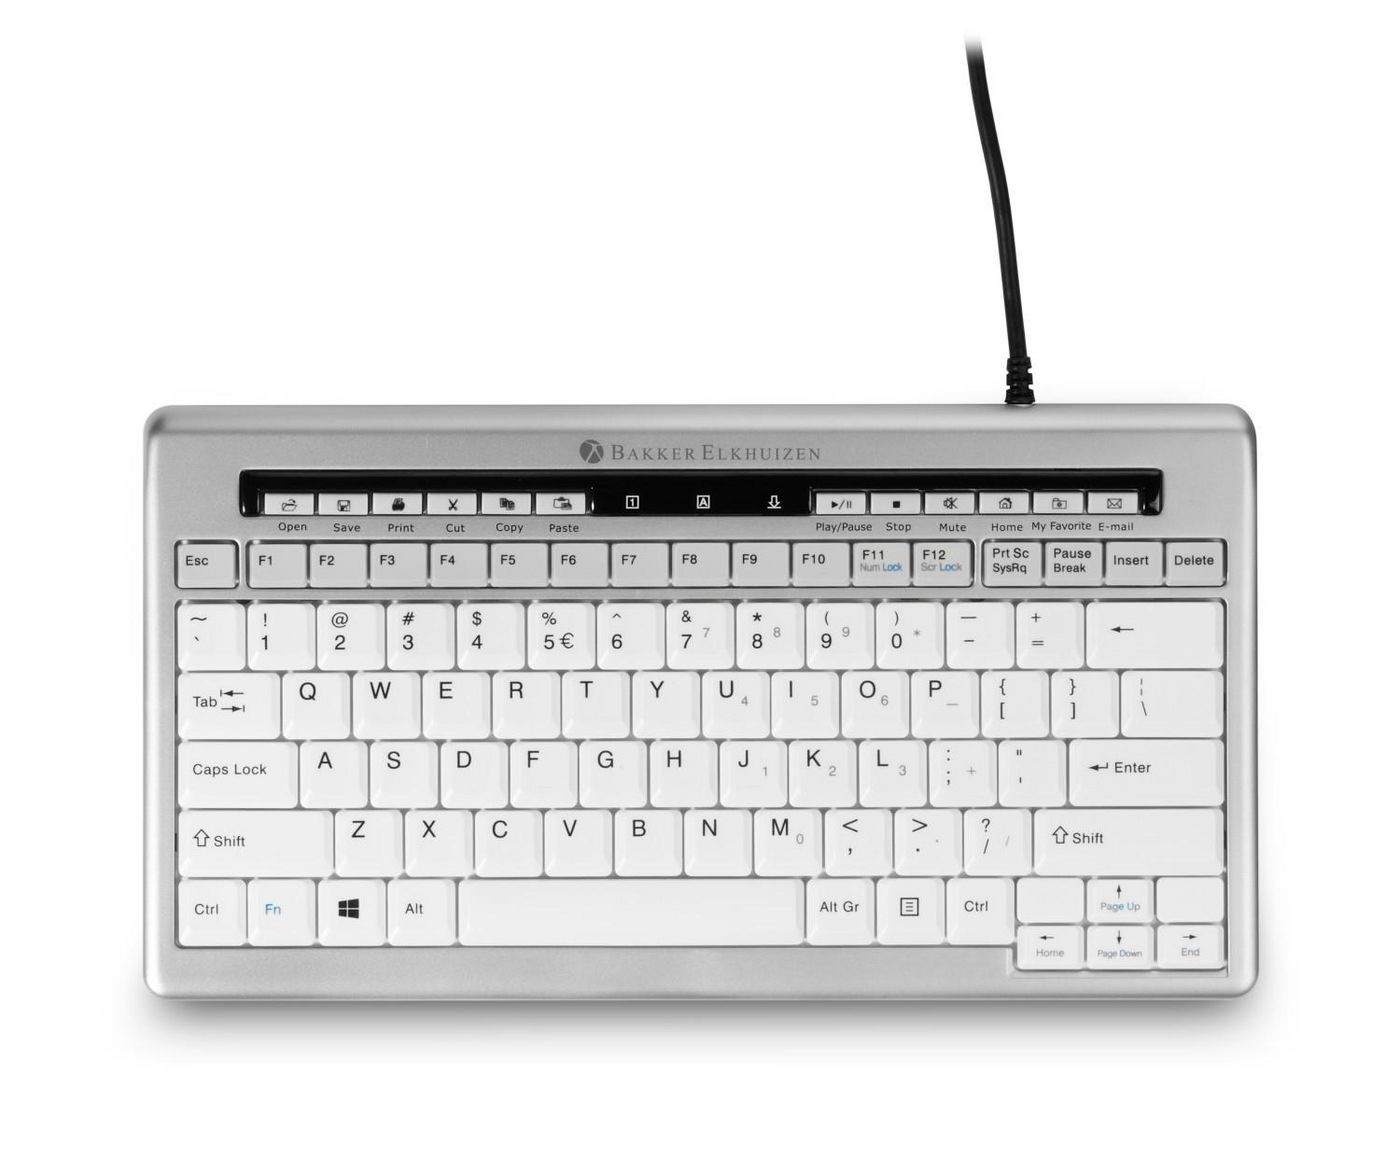 BAKKERELKHUIZEN Bakker Elkhuizen S-board 840 - Tastatur - USB - US (BNES840DUS)